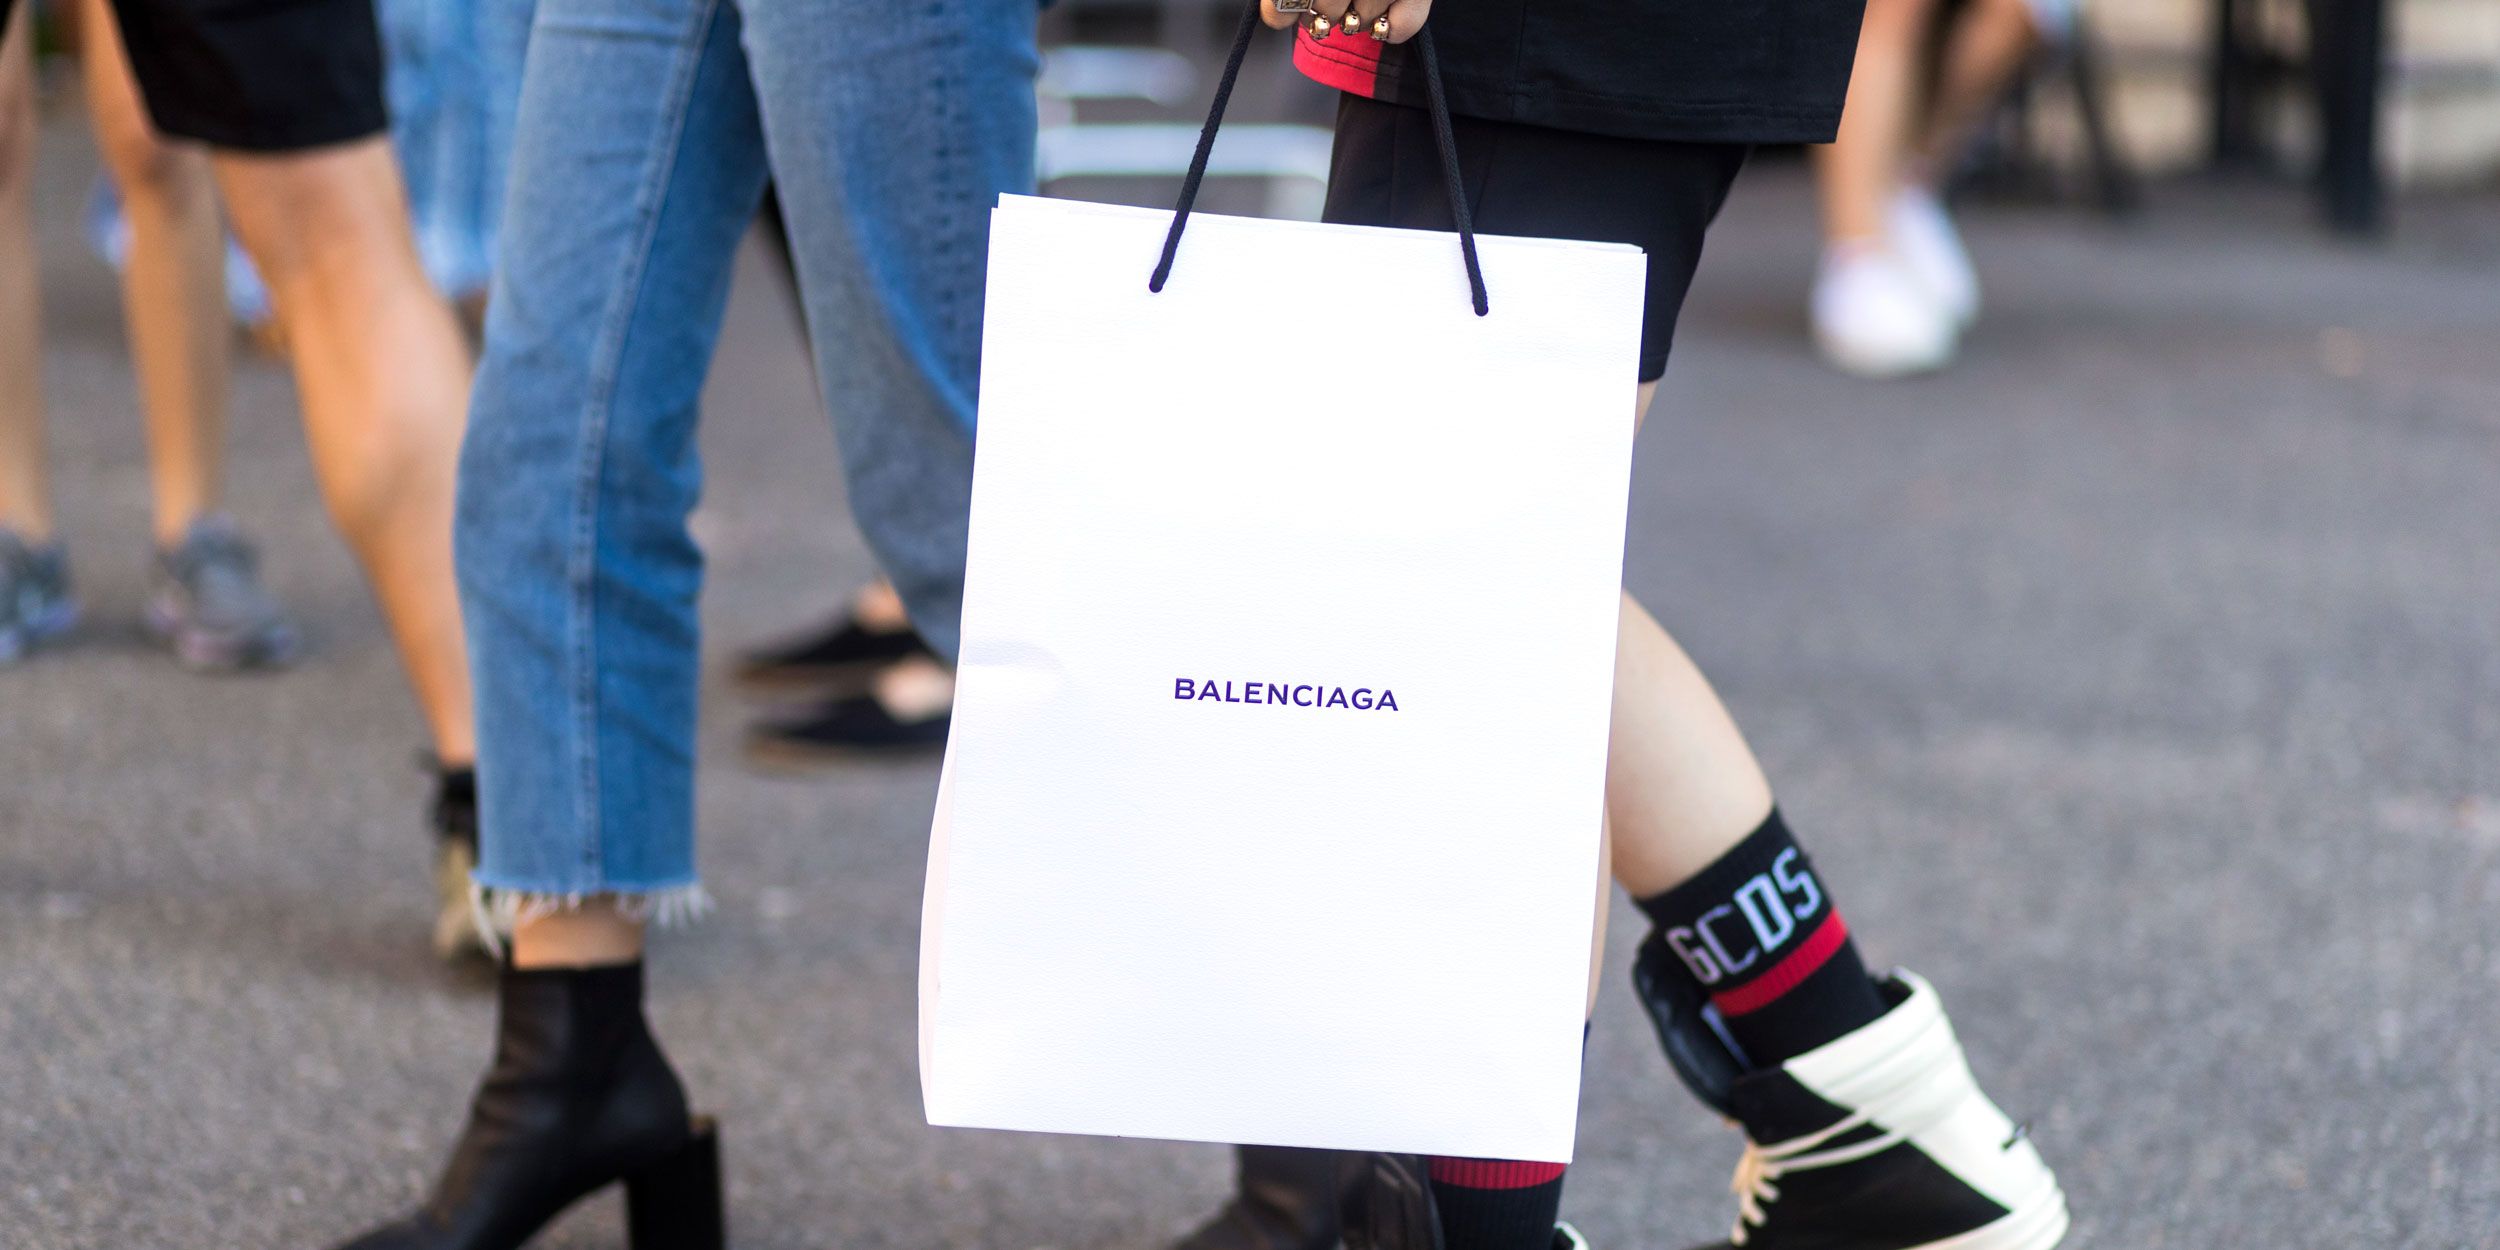 Watch TikTokers destroy Balenciaga bags, clothing after BDSM ad backlash